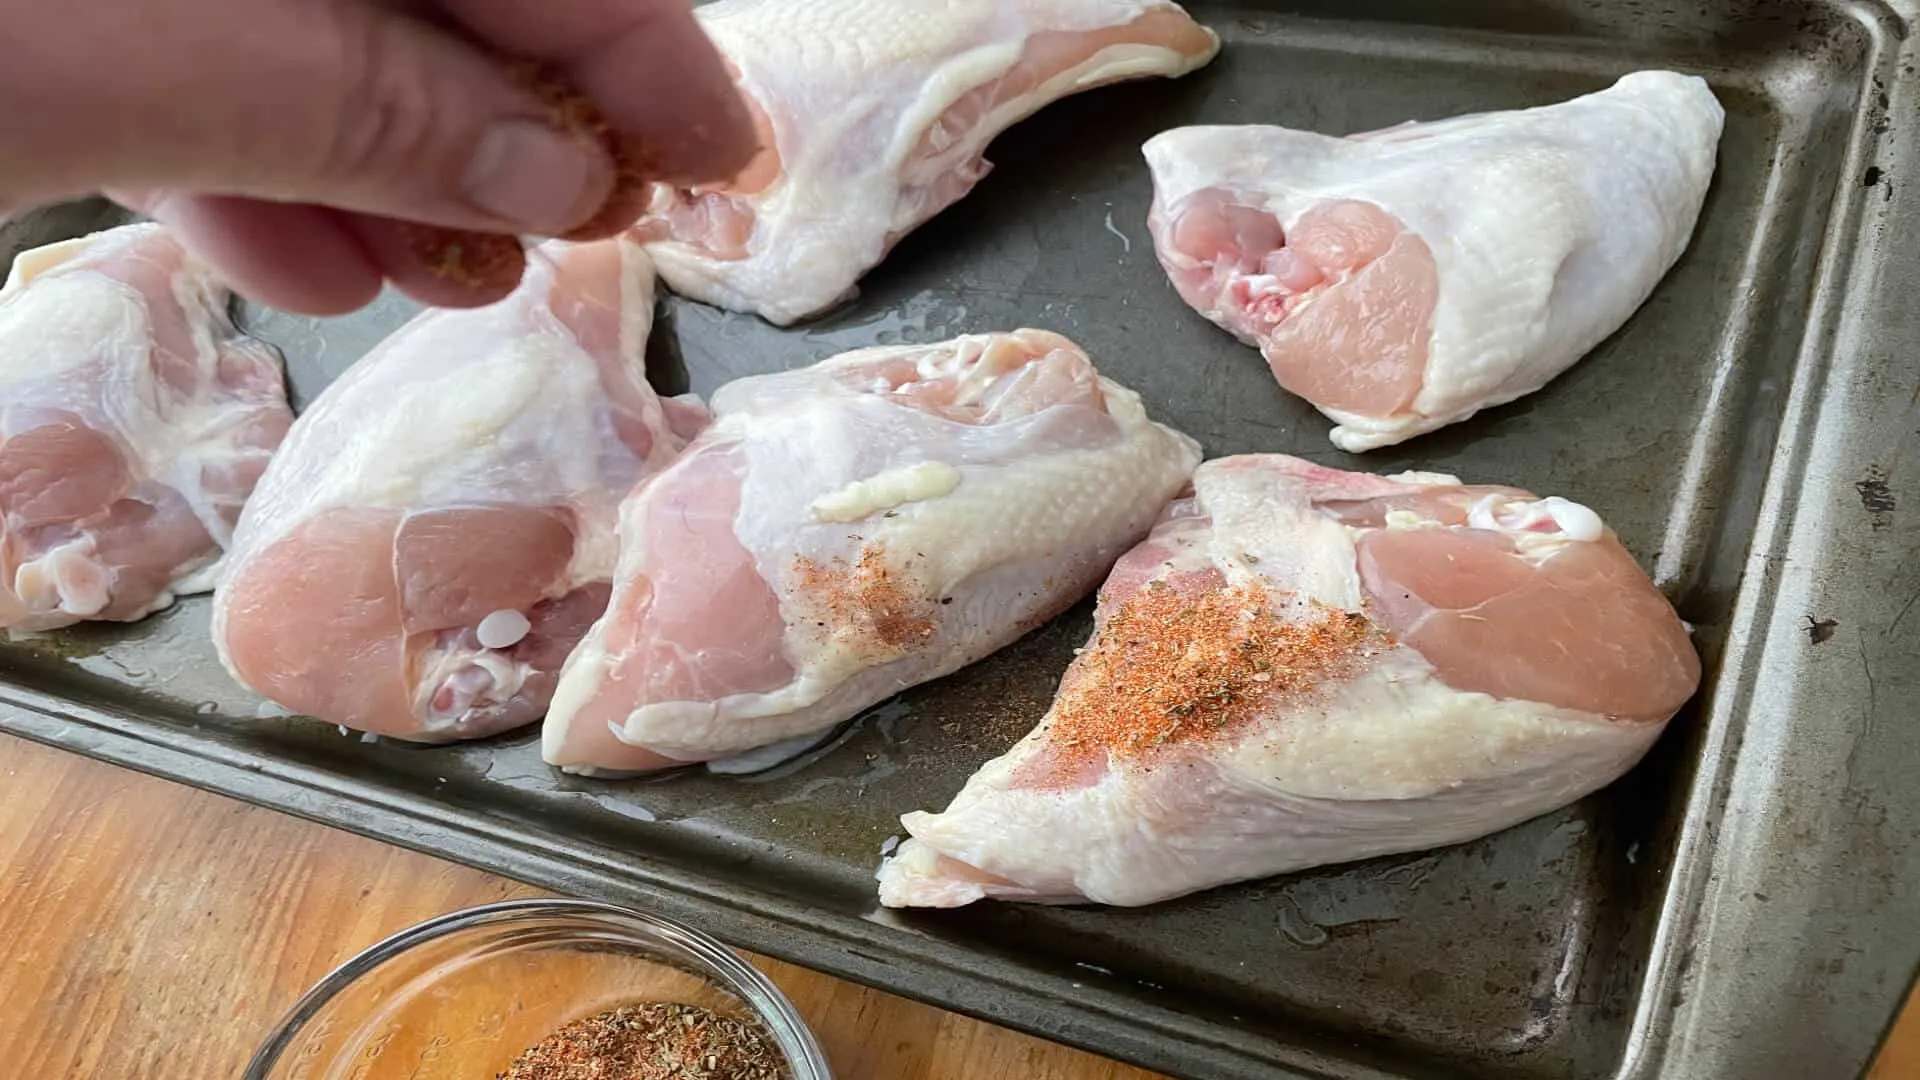 Whole Chicken Breast Recipe-Step 3 adding Cajun seasoning